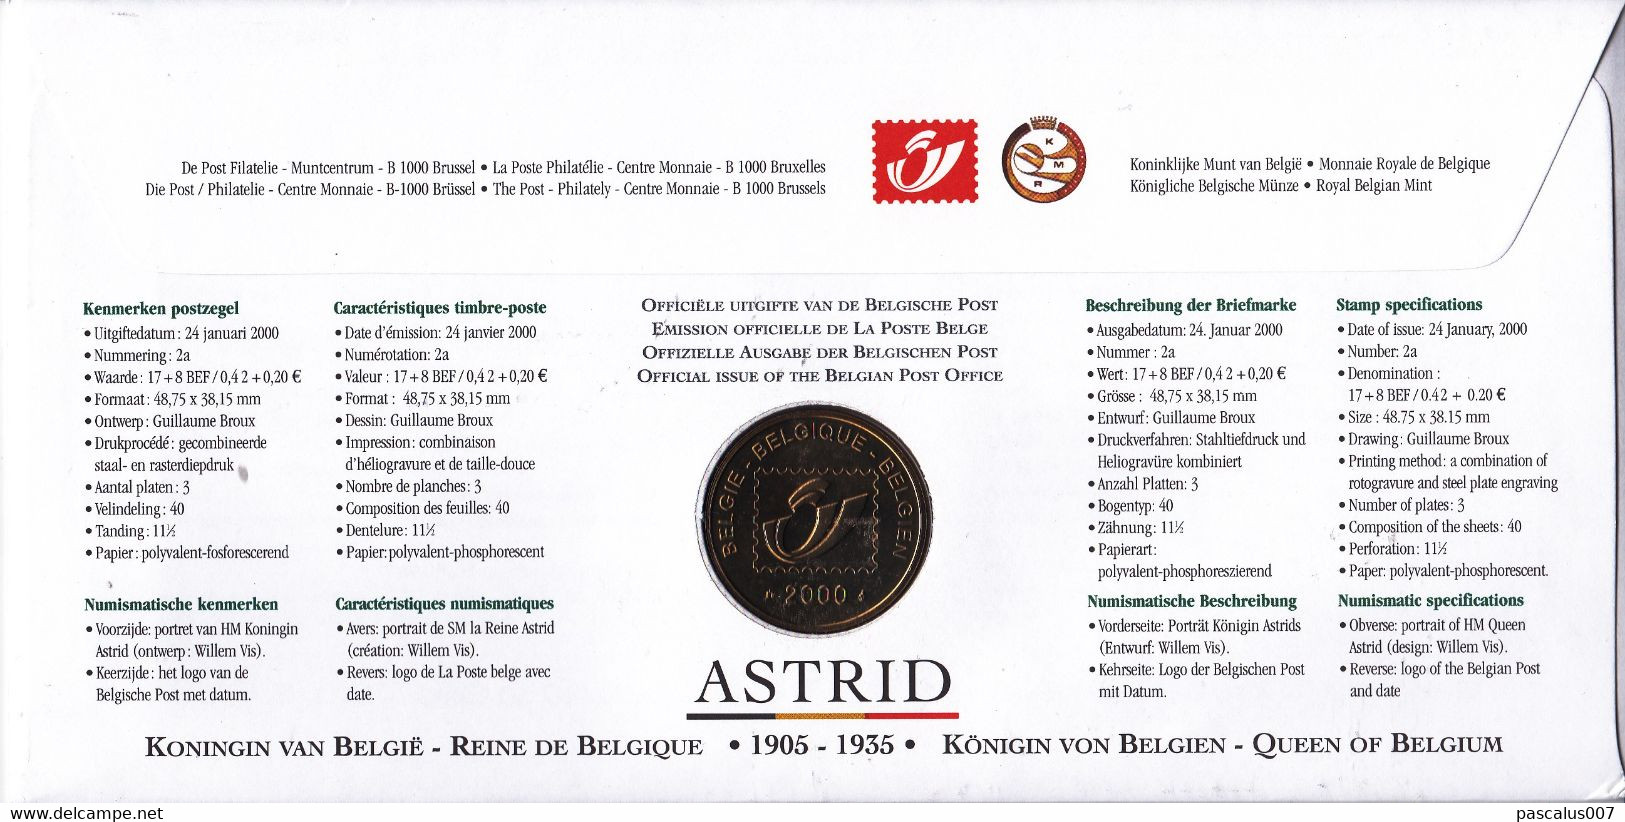 B01-372 2879 FDC Numisletter Dynastie Royal Couronne Reine Astrid Belge 22-01-2000 3520 Zonhoven - Numisletter